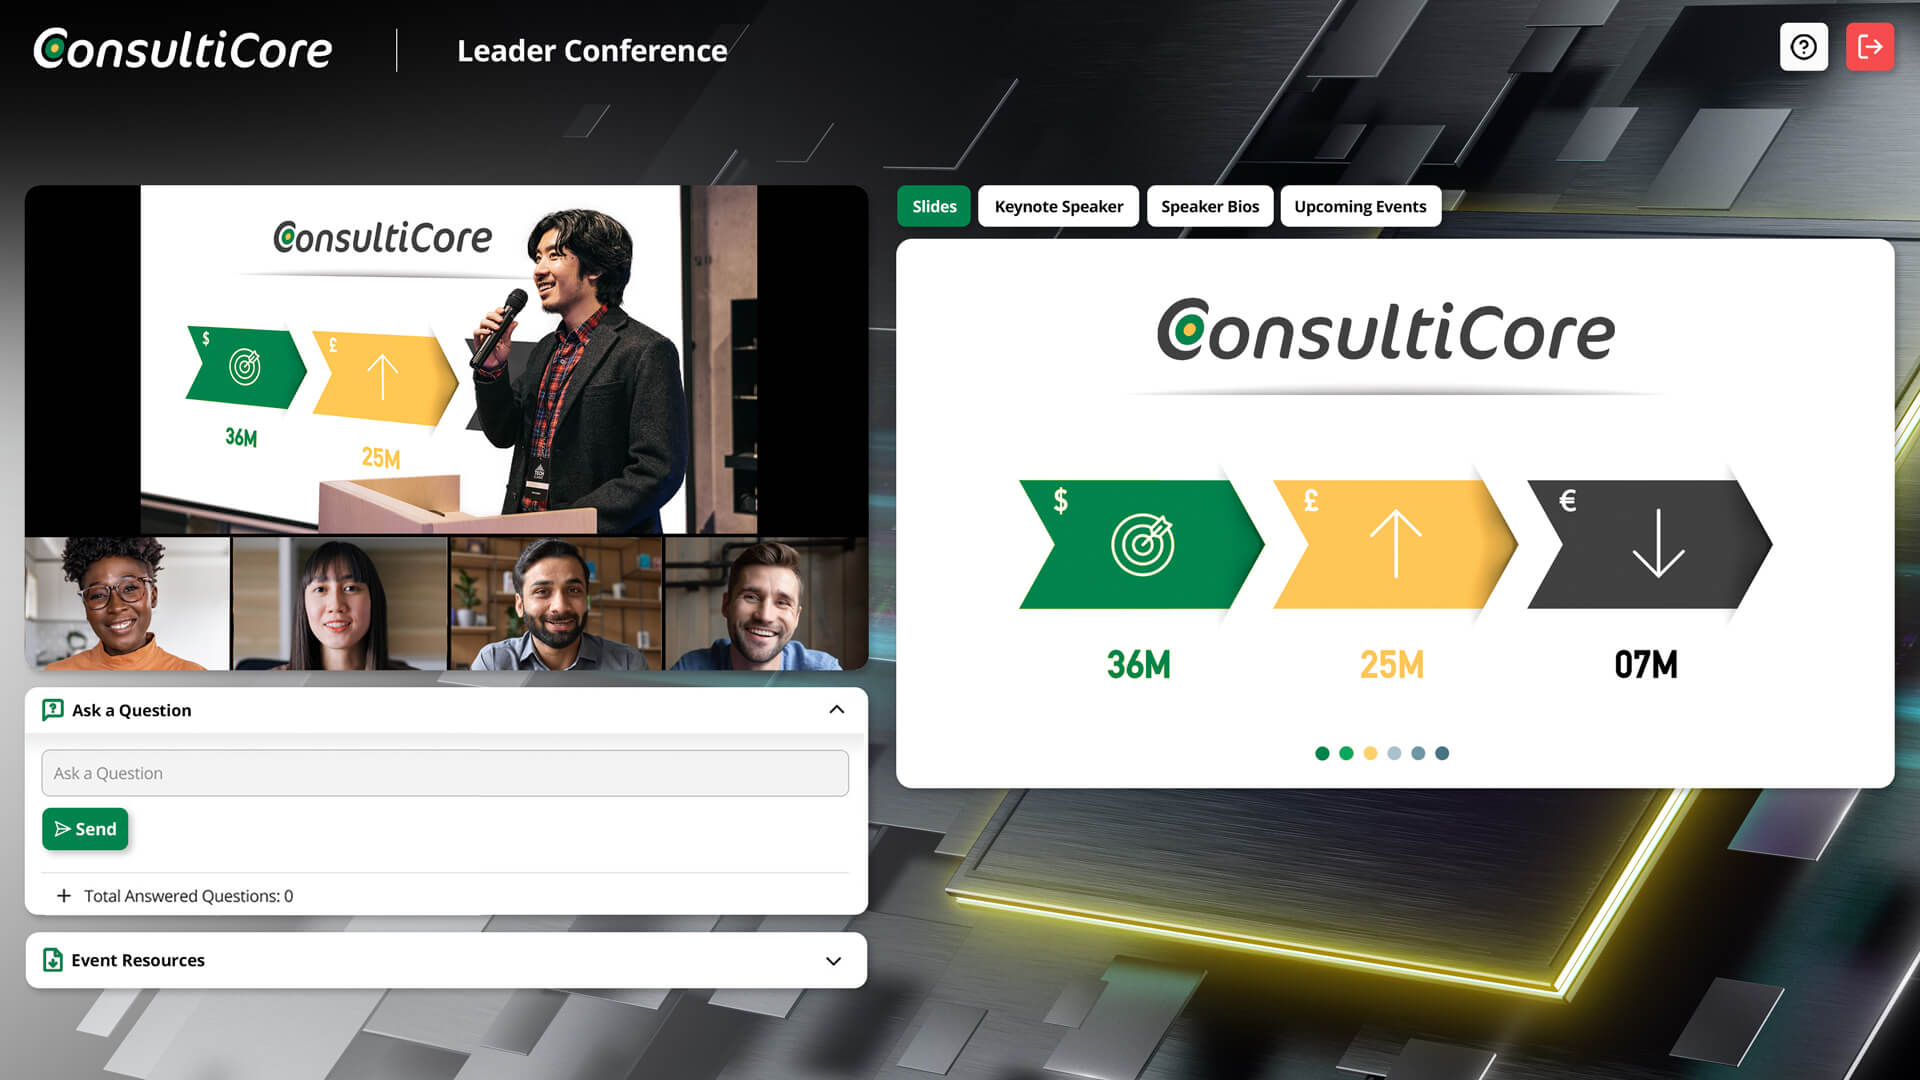 Consulticore leader conference event